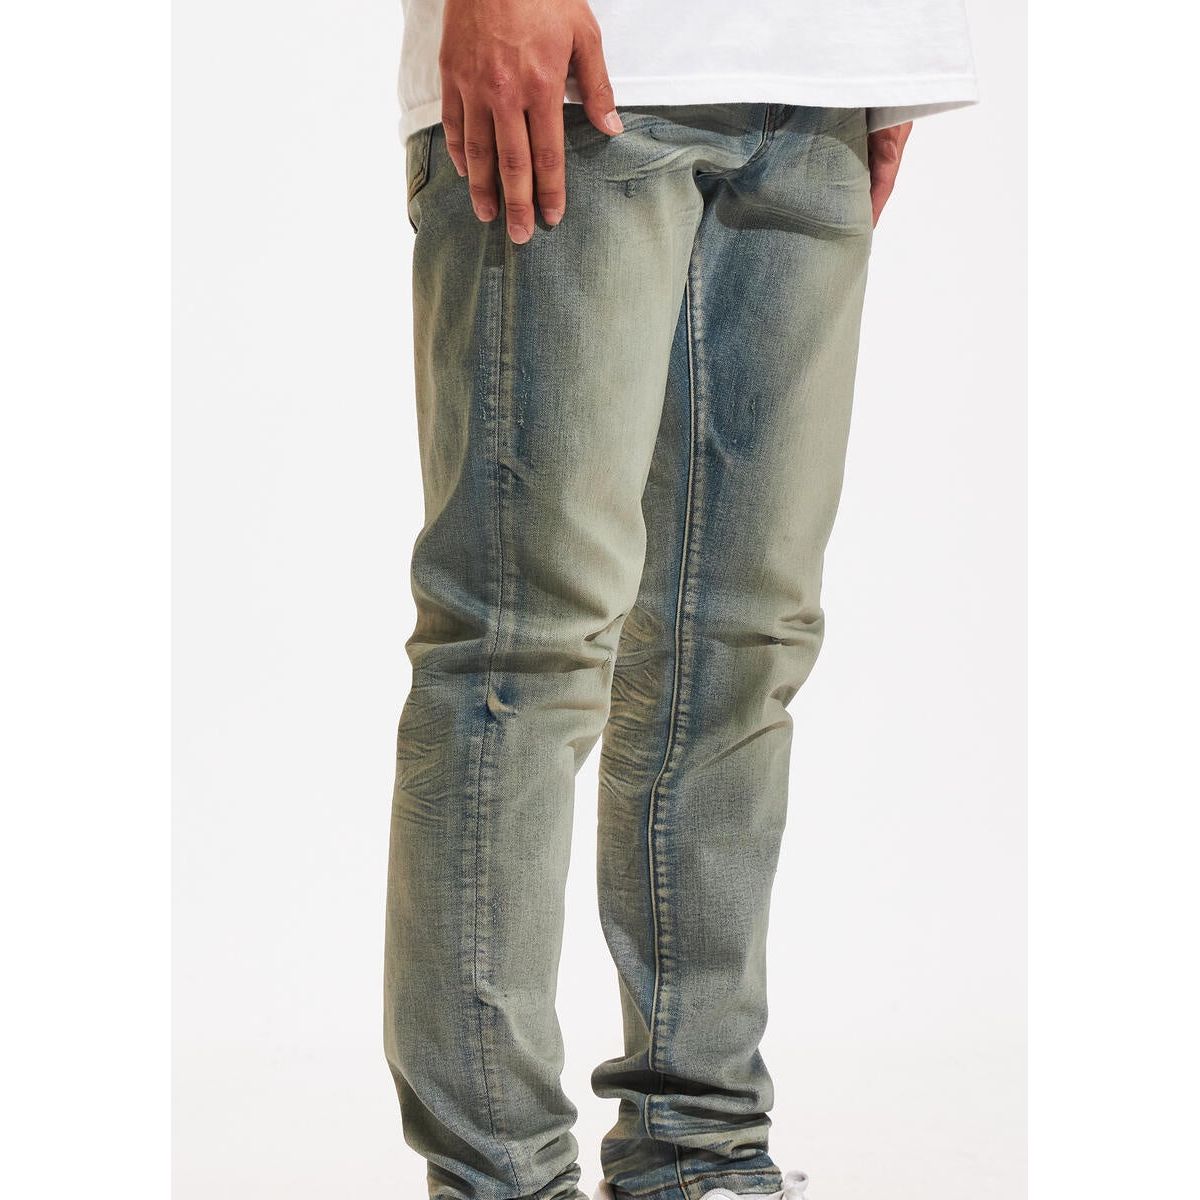 Crysp Denim Atlantic Stone Denim Jeans (CRYSPHOL23-18)